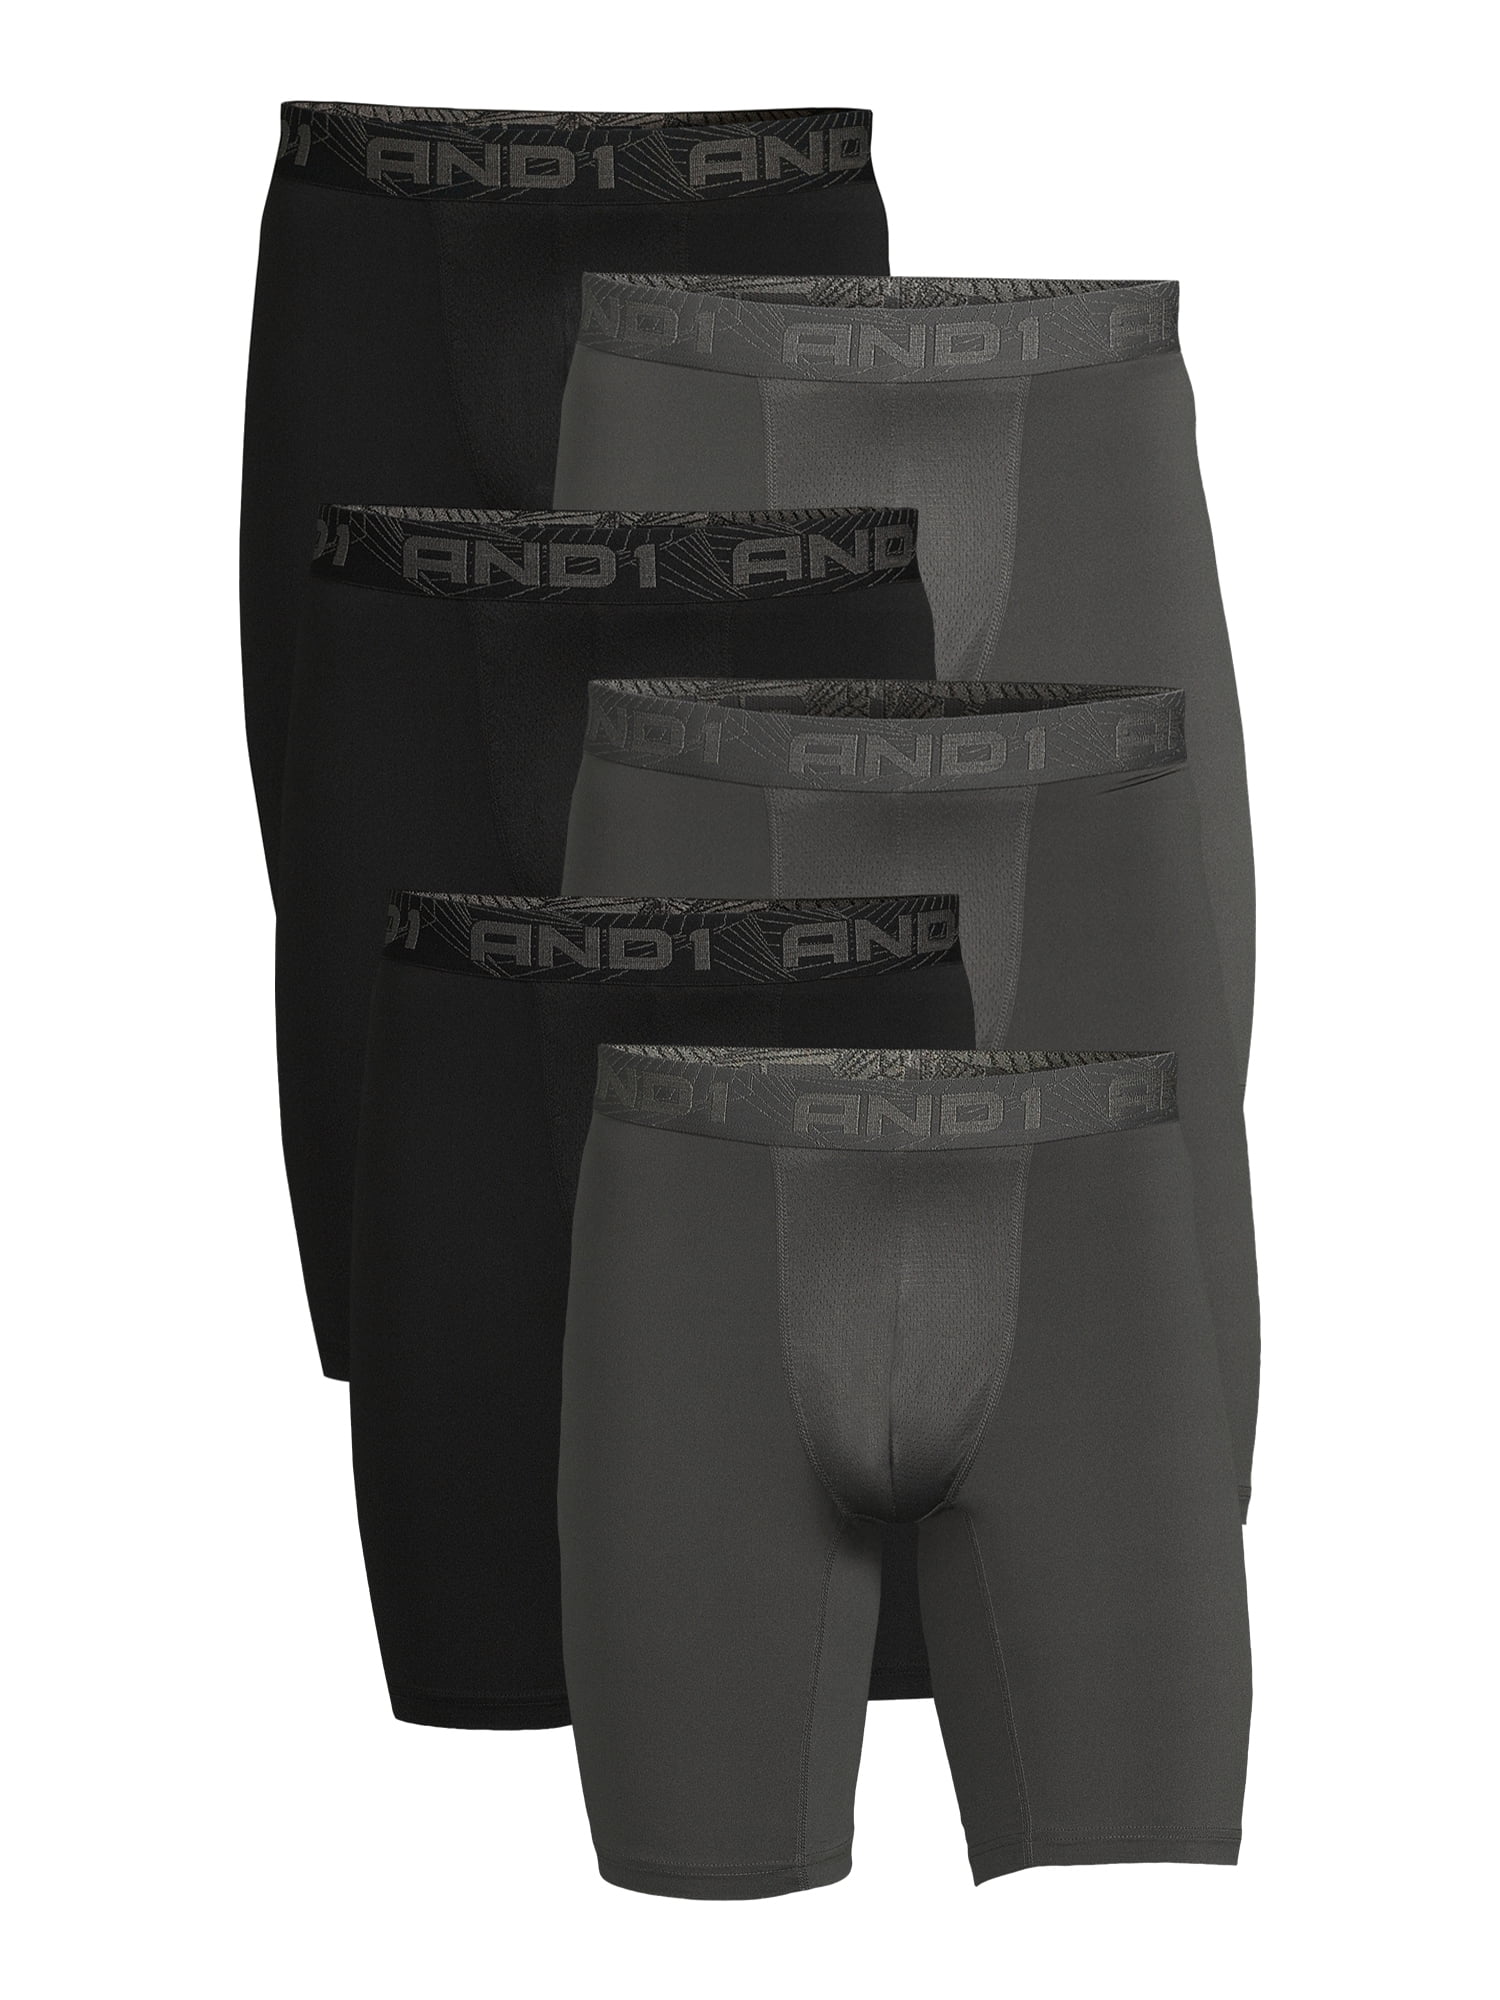 AND1 Men's Underwear Pro Platinum Long Leg Boxer Briefs, 9 - Yahoo Shopping